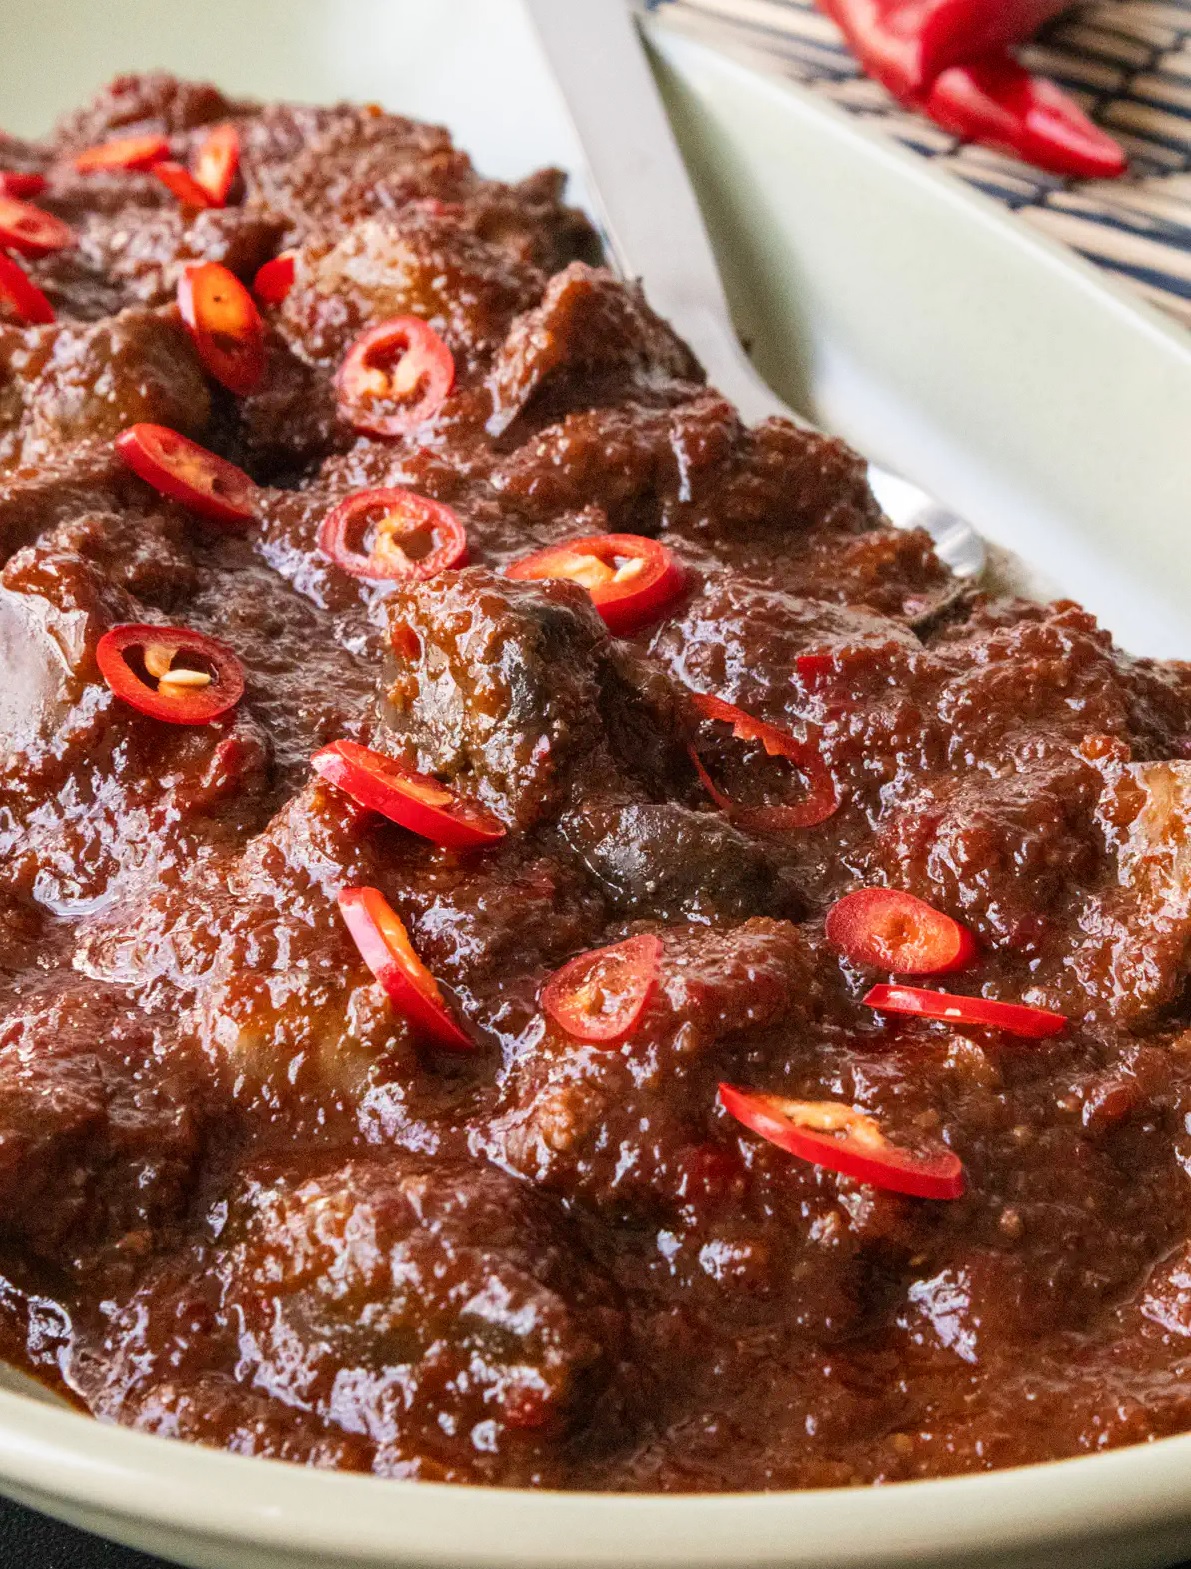 Sambal Goreng Hati – Liver with Chili Sauce